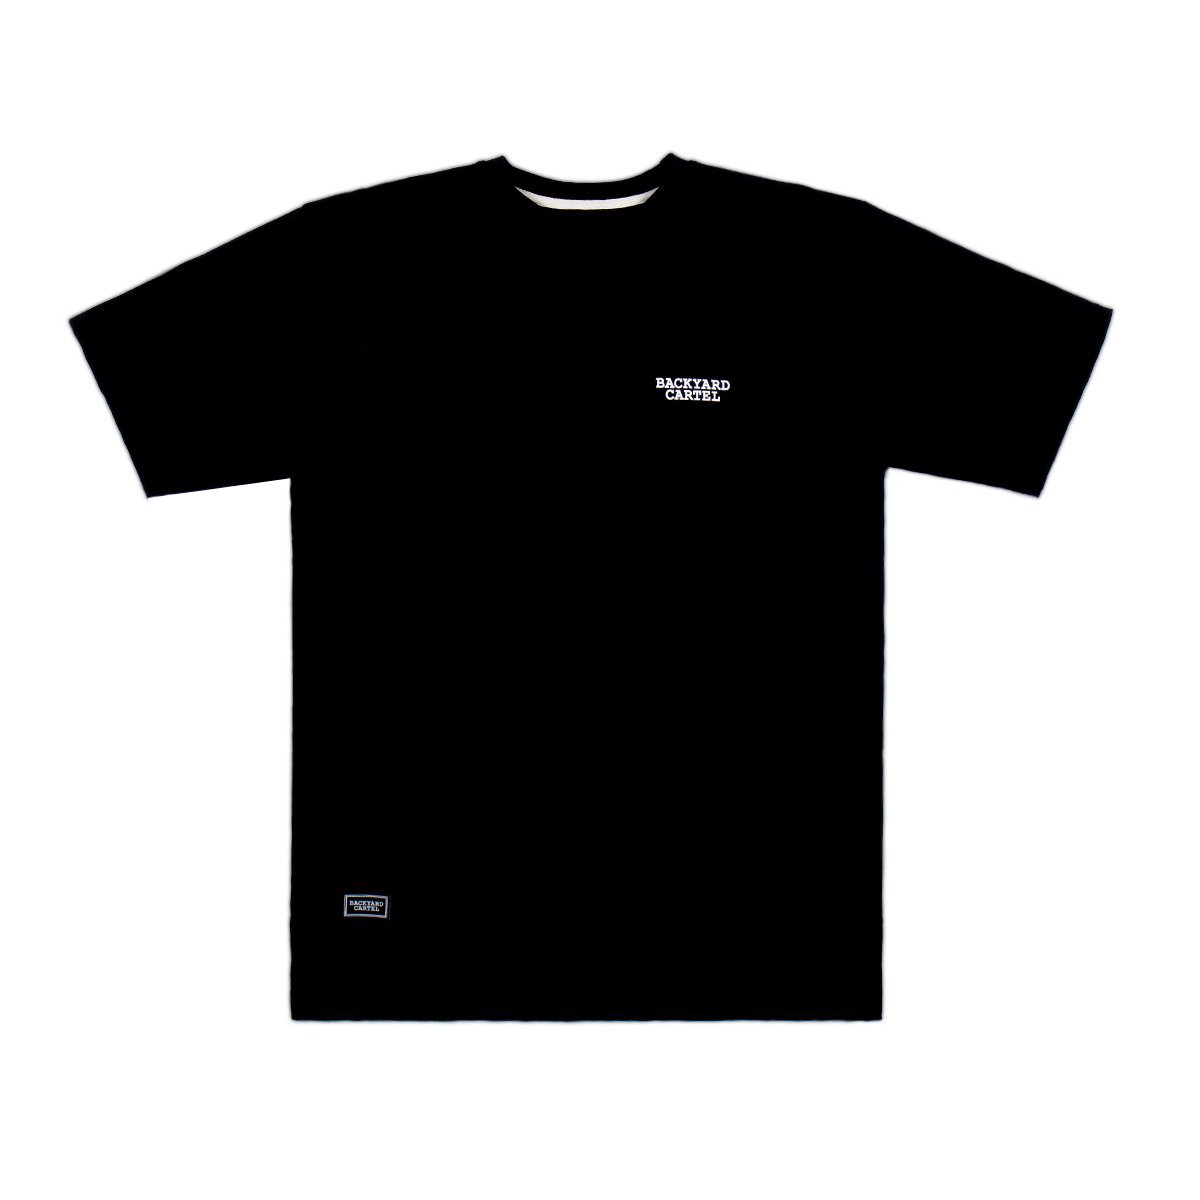 Backyard Cartel Label Logo T-shirt black | Bludshop.com